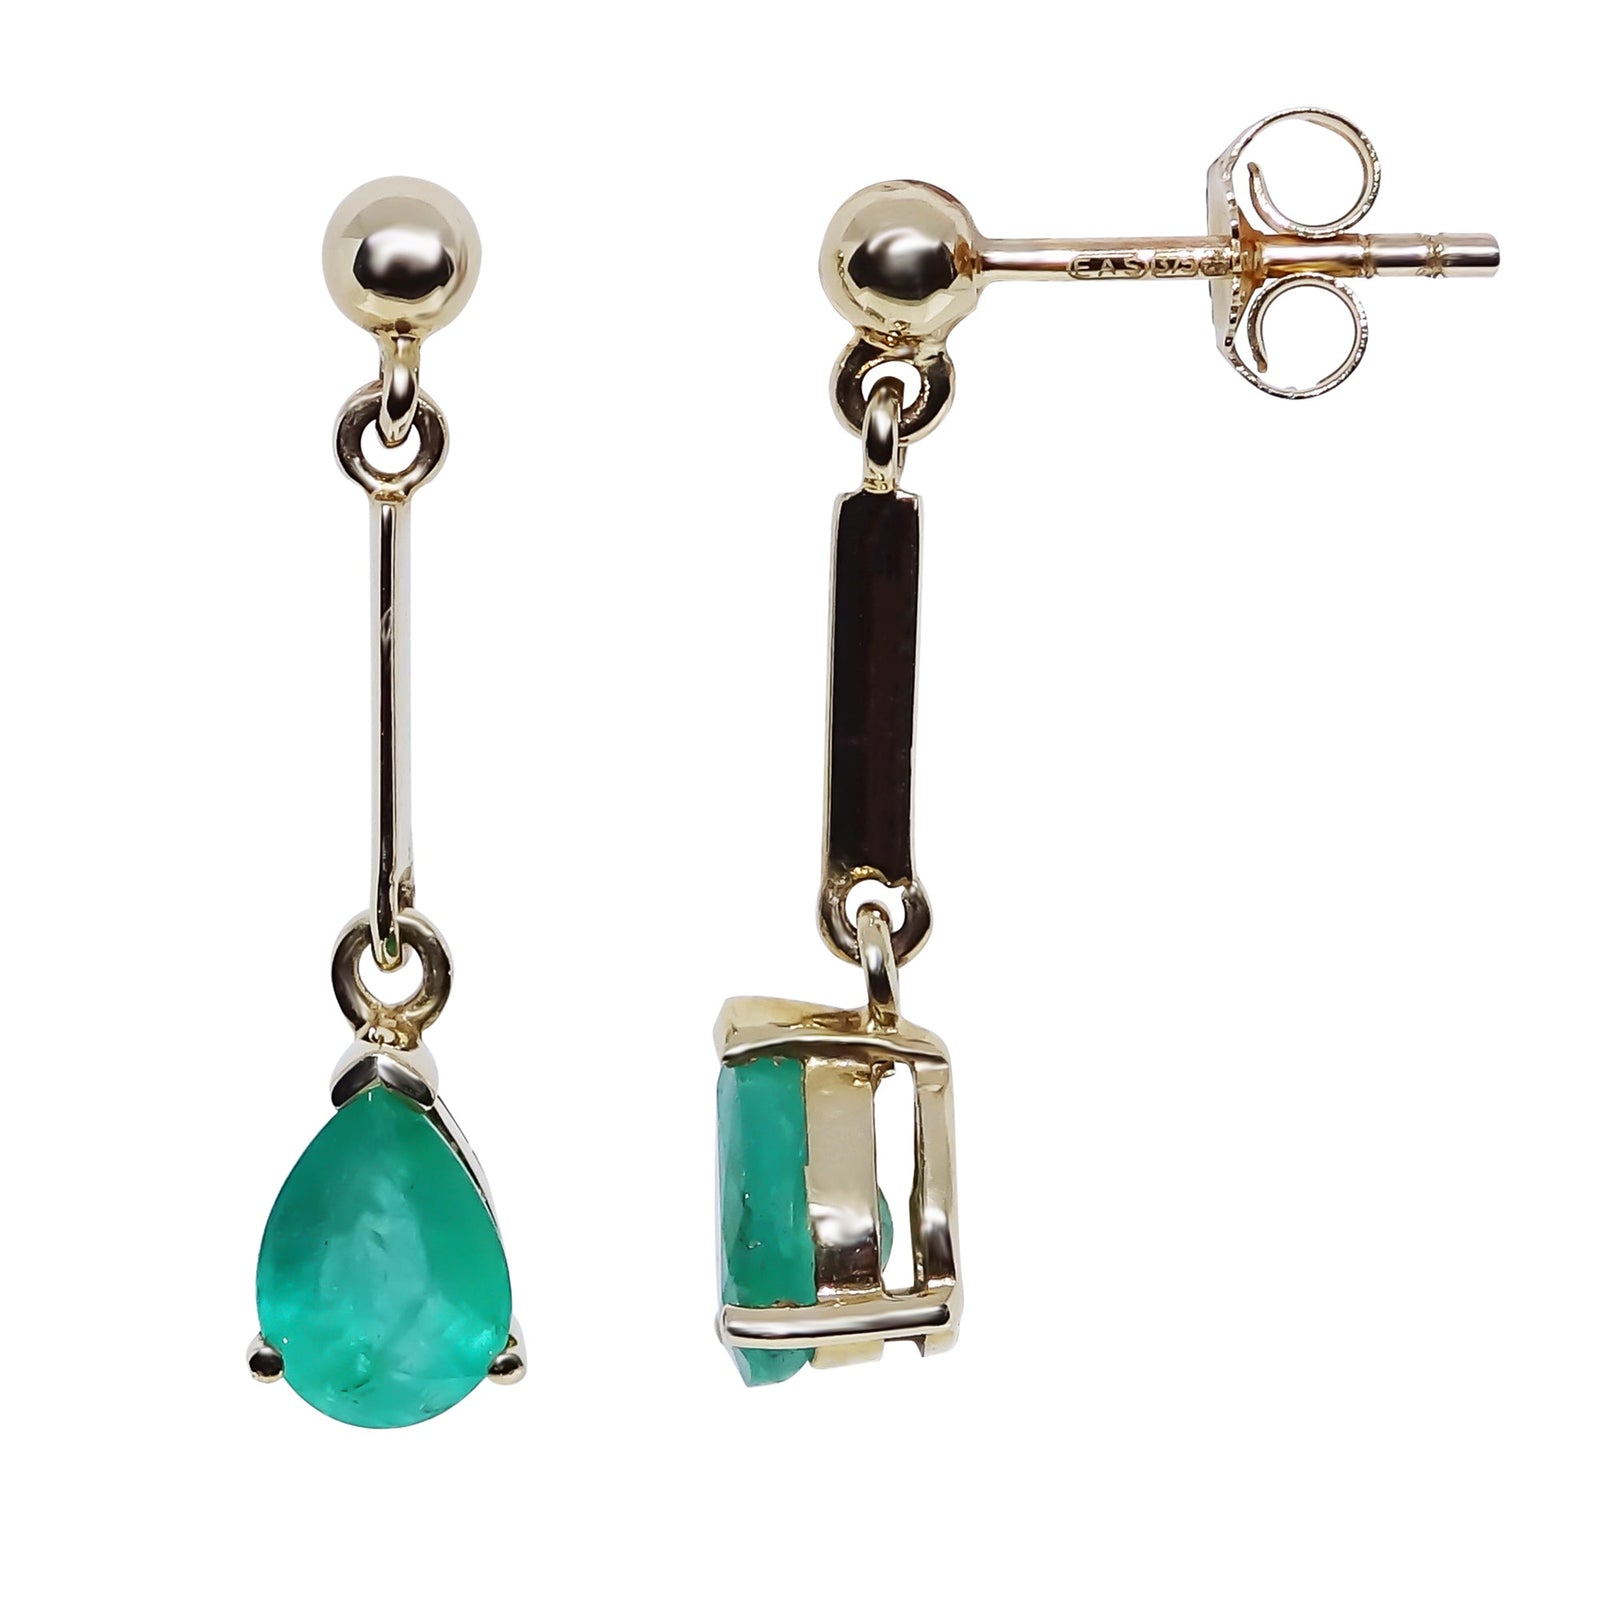 9ct gold plain bar 7x5mm pear shape emerald drop earrings